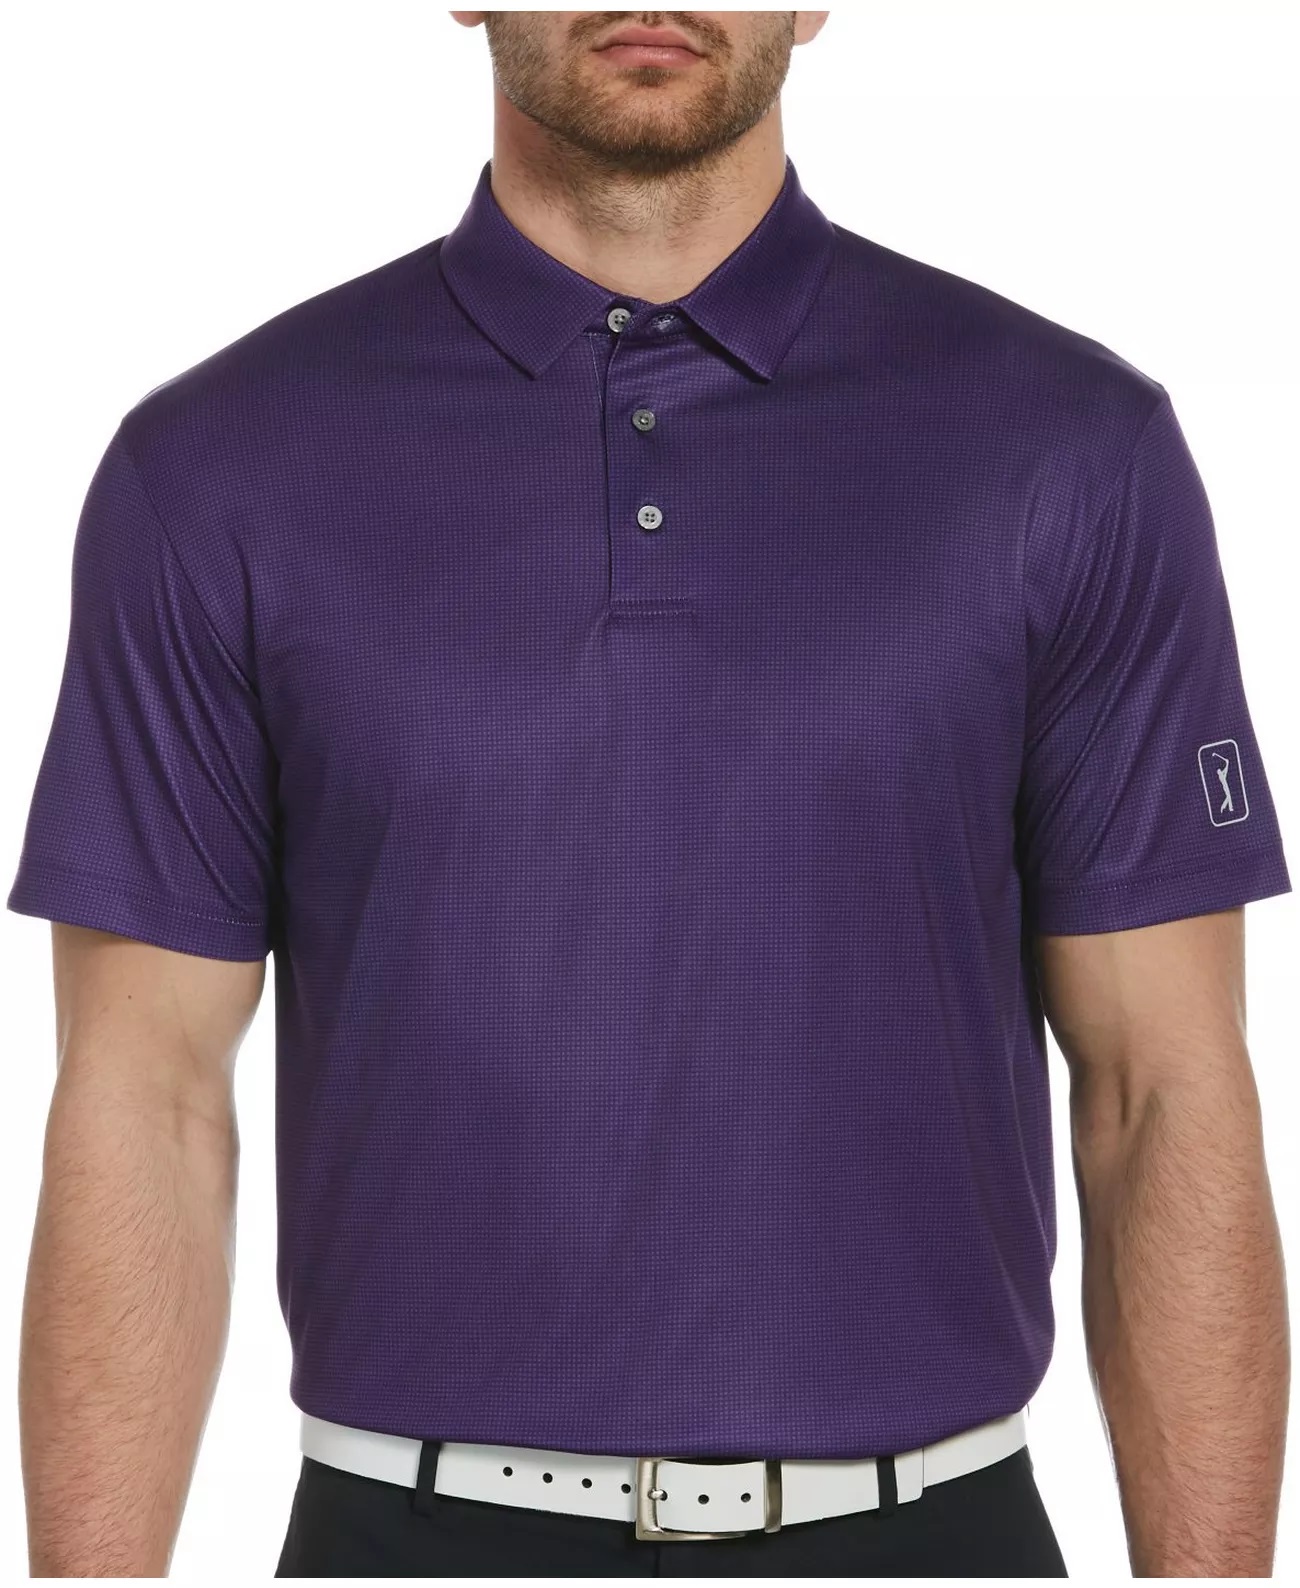 woocommerce-673321-2209615.cloudwaysapps.com-pga-tour-mens-purple-gingham-golf-polo-shirt